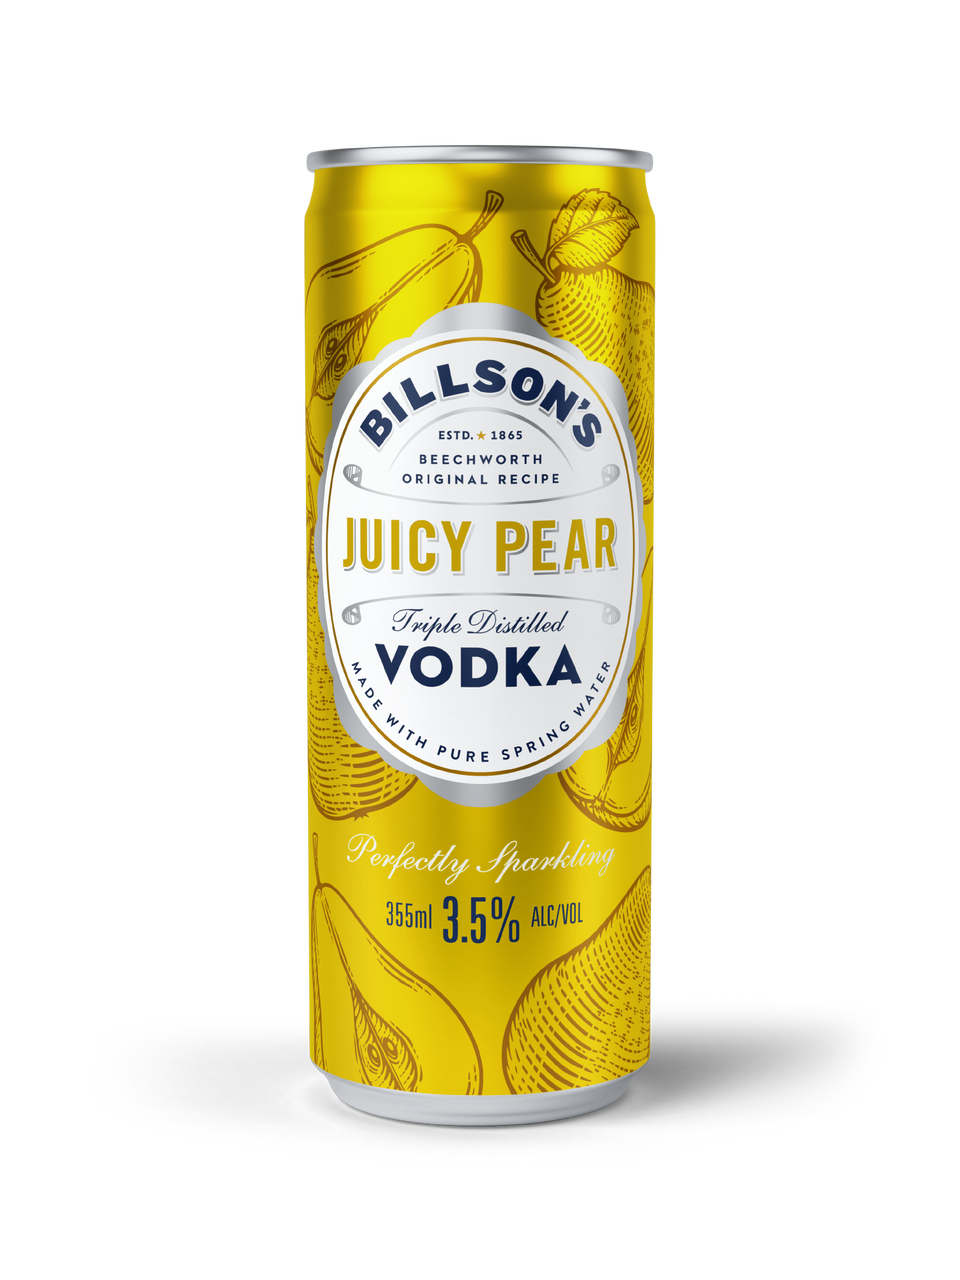 Billson's Juicy Pear Vodka